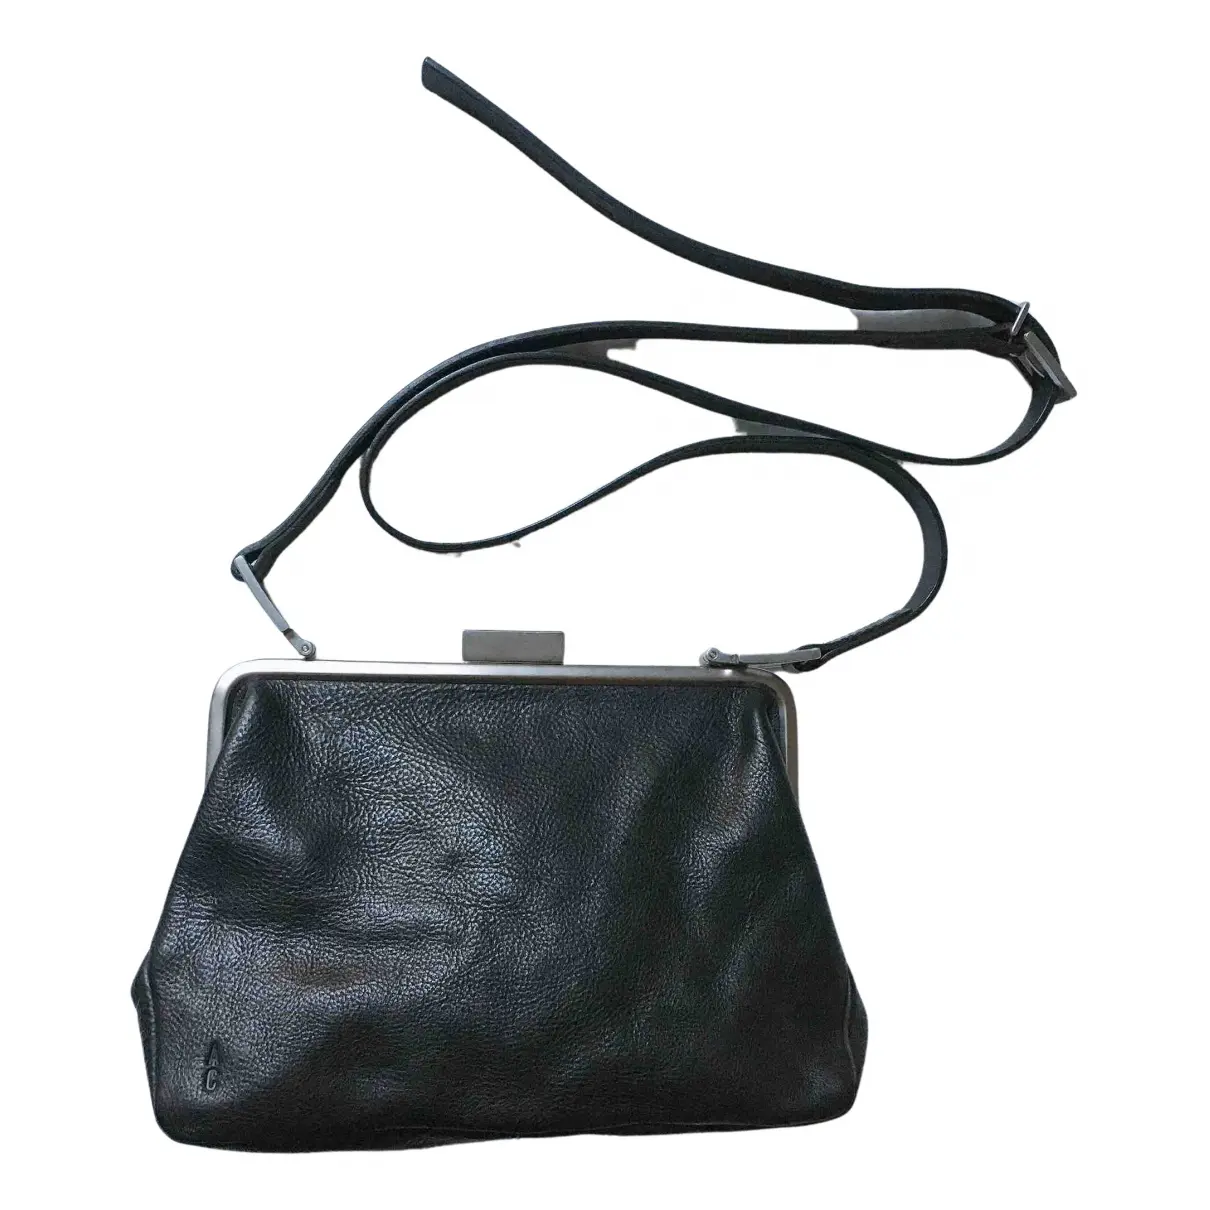 Leather handbag Ally Capellino